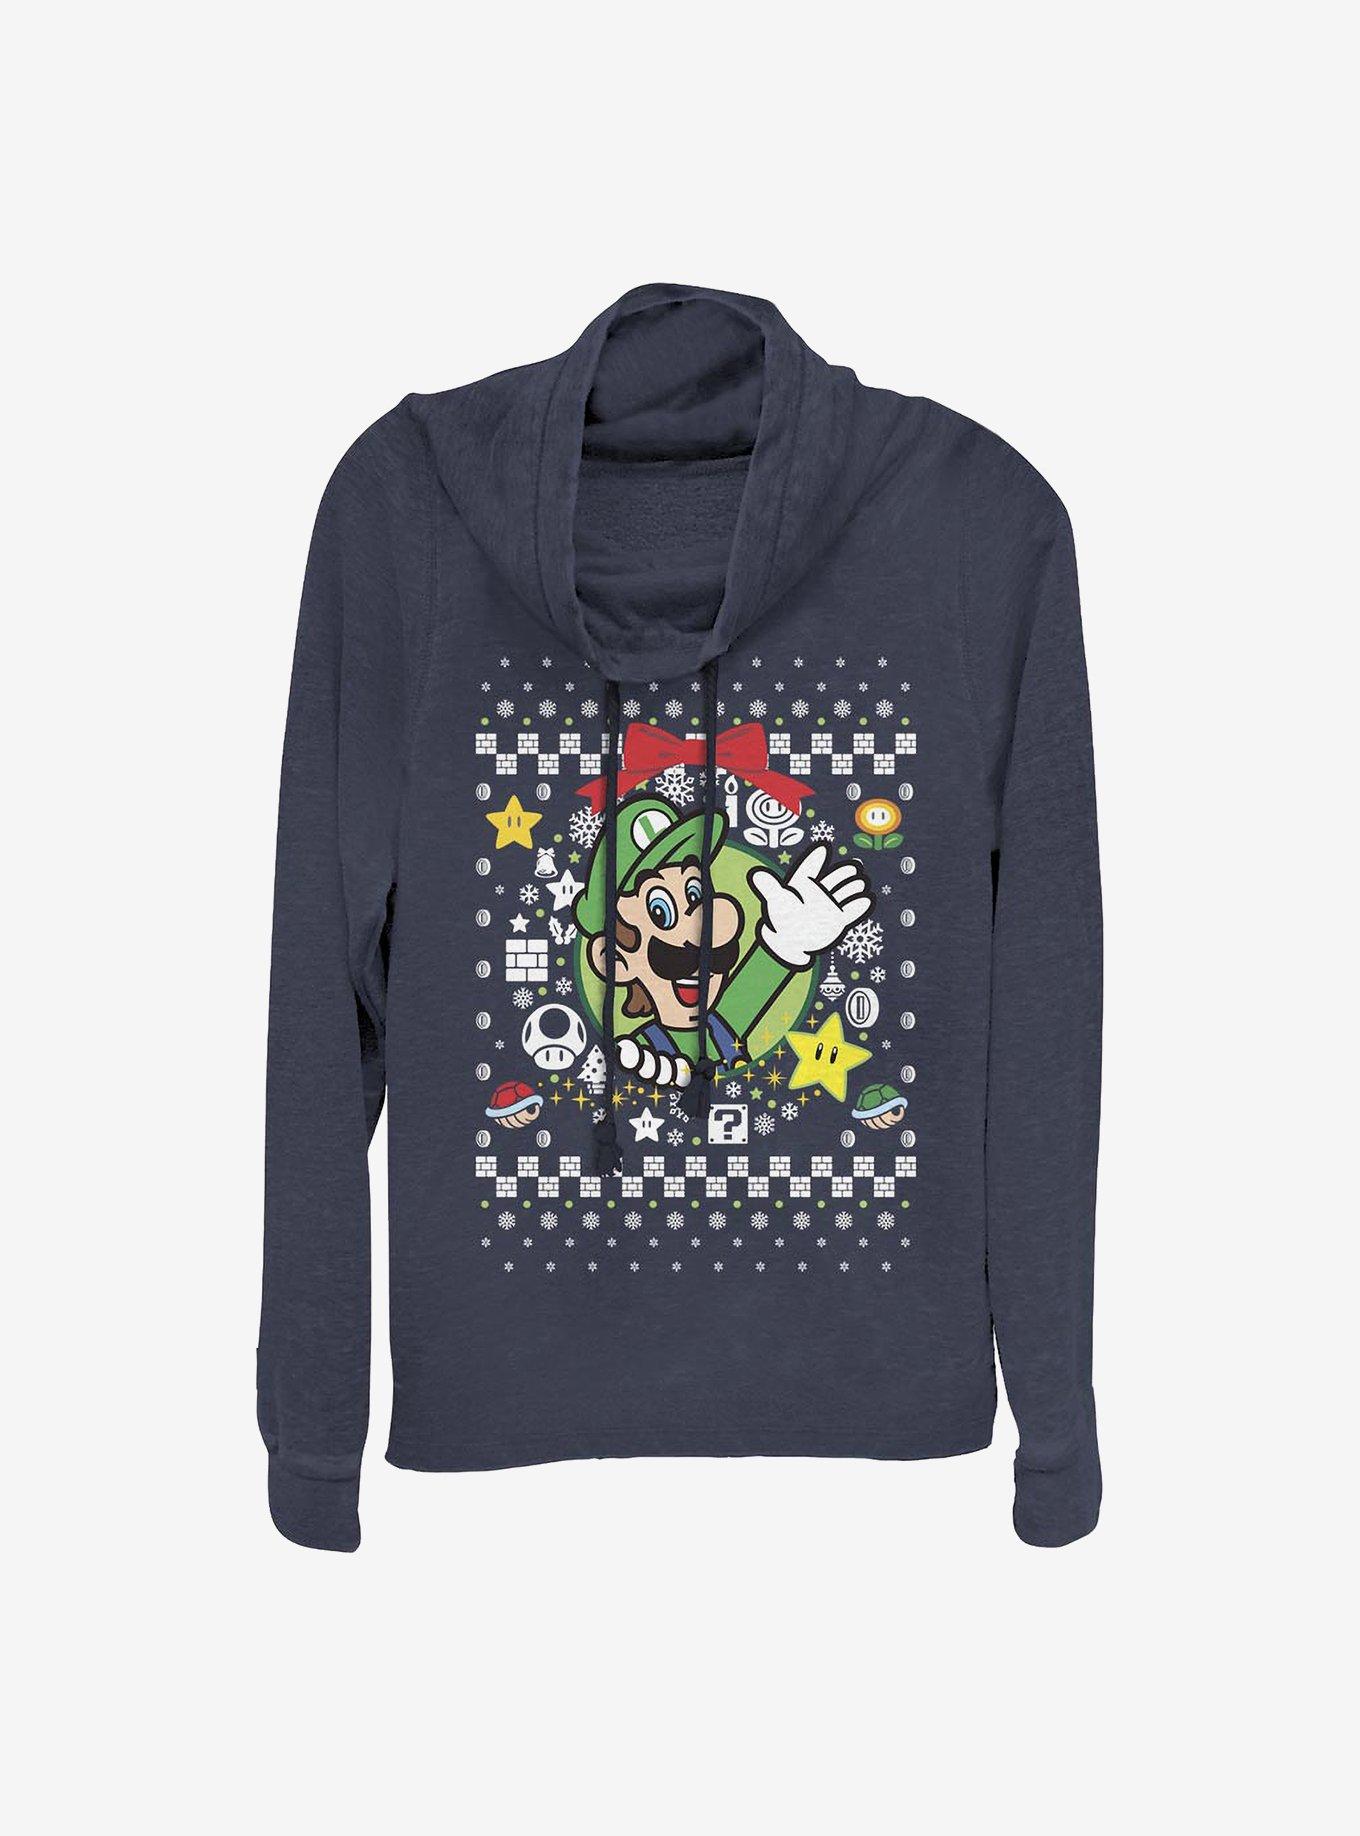 Super Mario Luigi Wreath Ugly Christmas Sweater Cowl Neck Long-Sleeve Girls Top, NAVY, hi-res